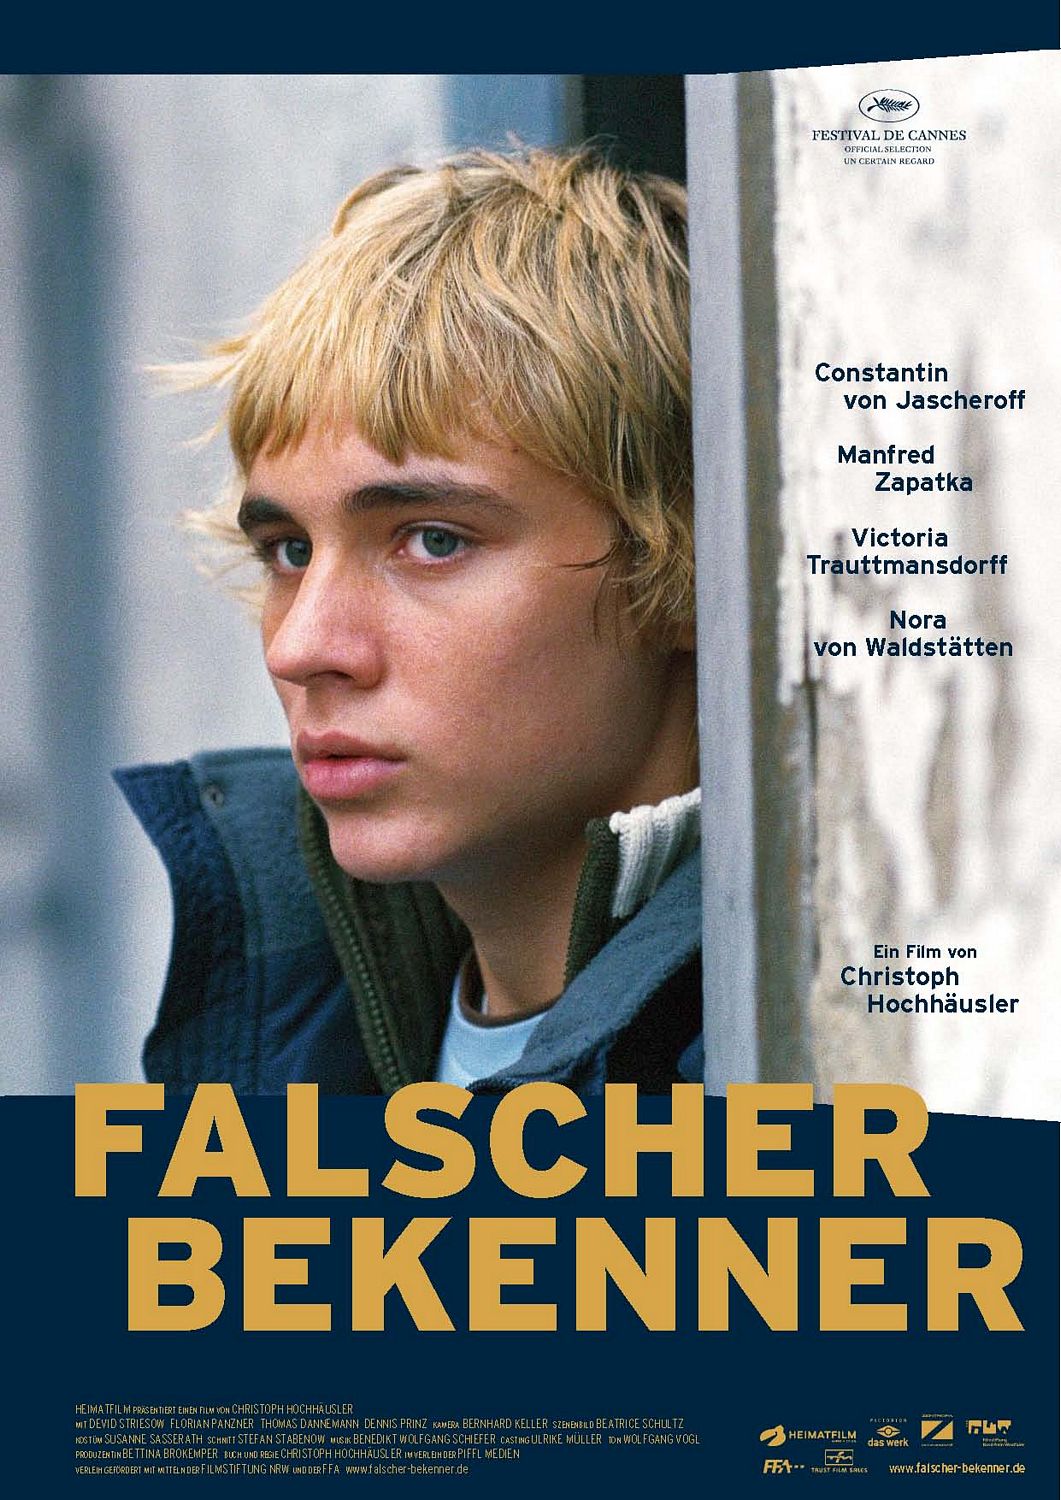 Extra Large Movie Poster Image for Falscher Bekenner (#1 of 2)